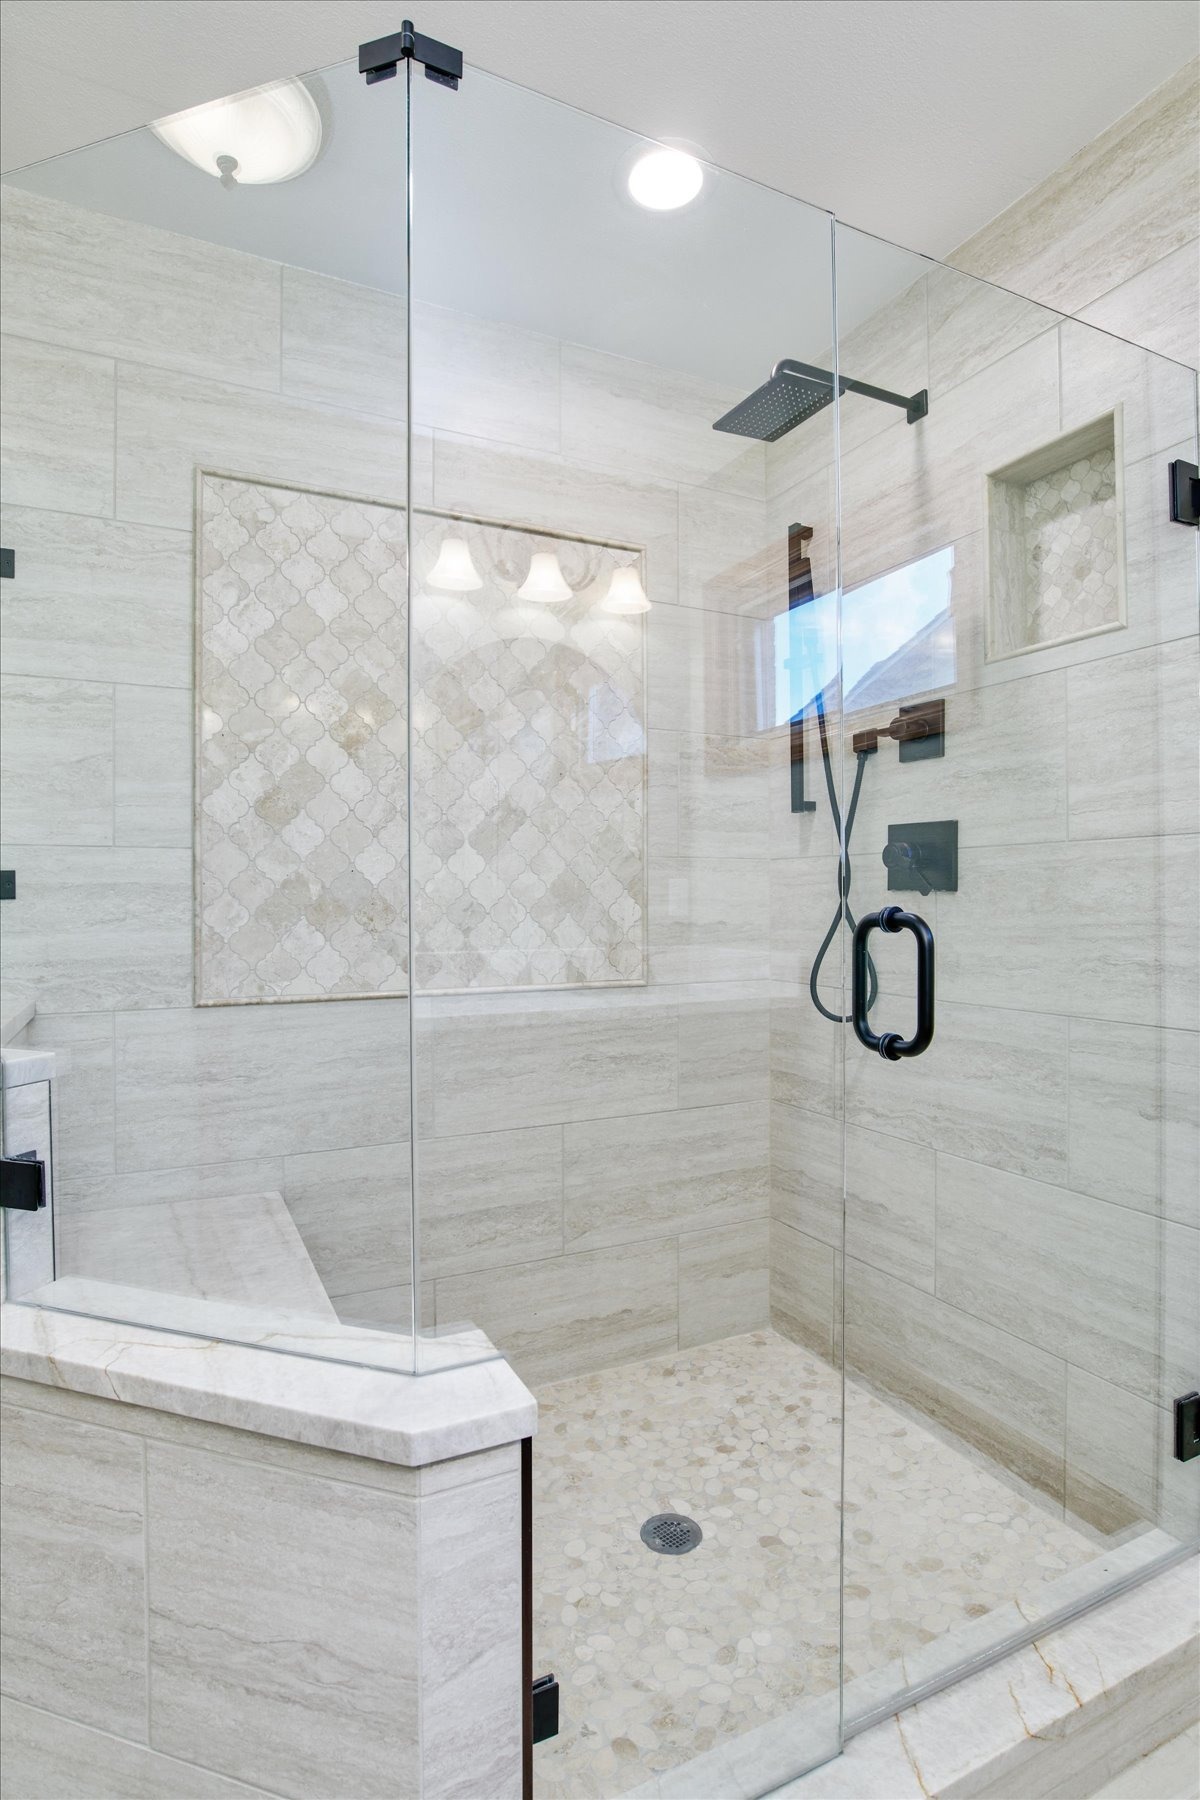 Luxurious Oversized Tiled Master Shower